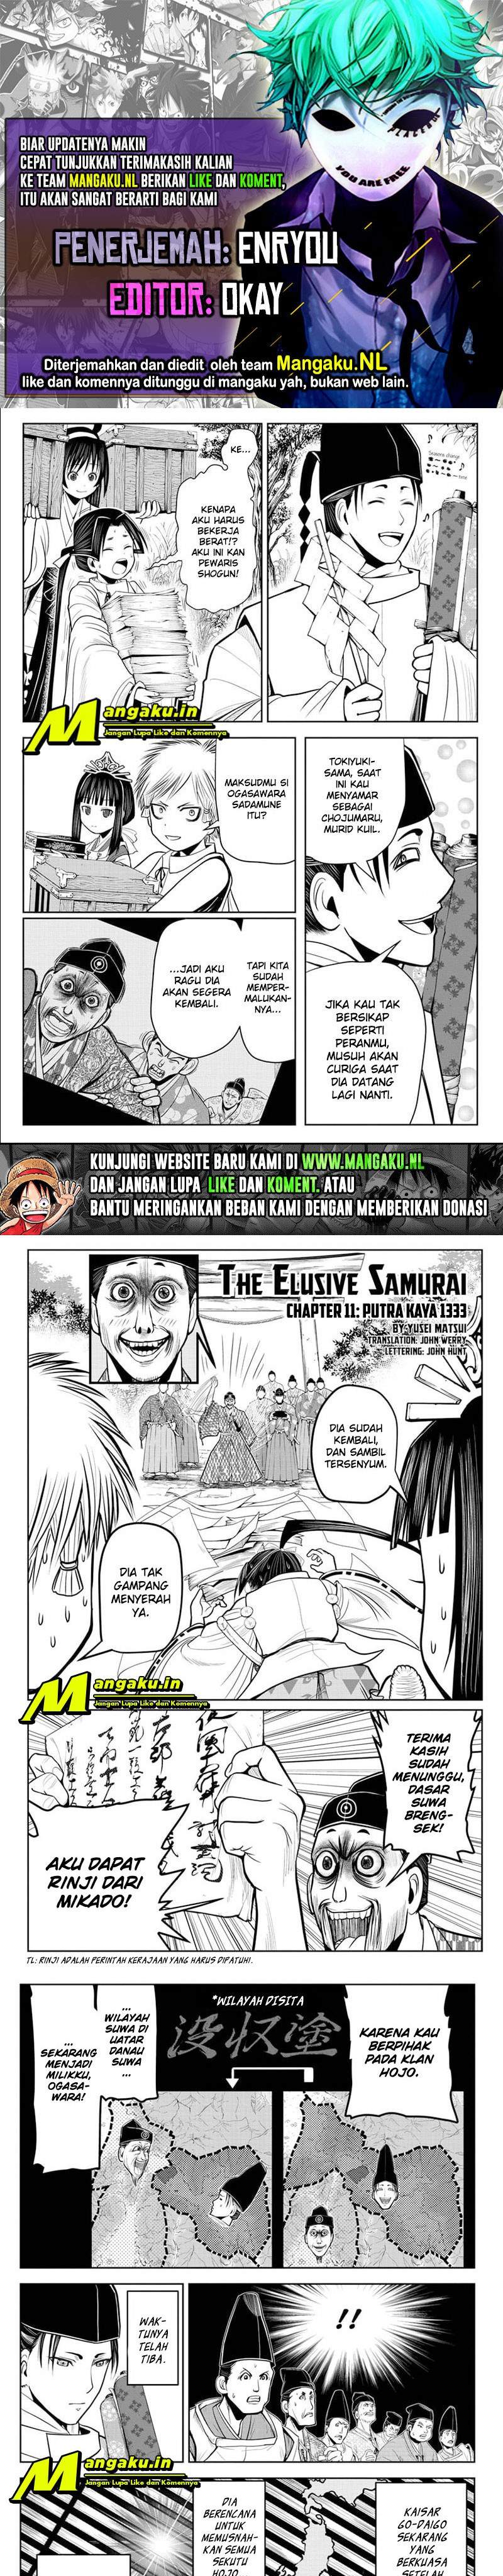 The Elusive Samurai Chapter 11